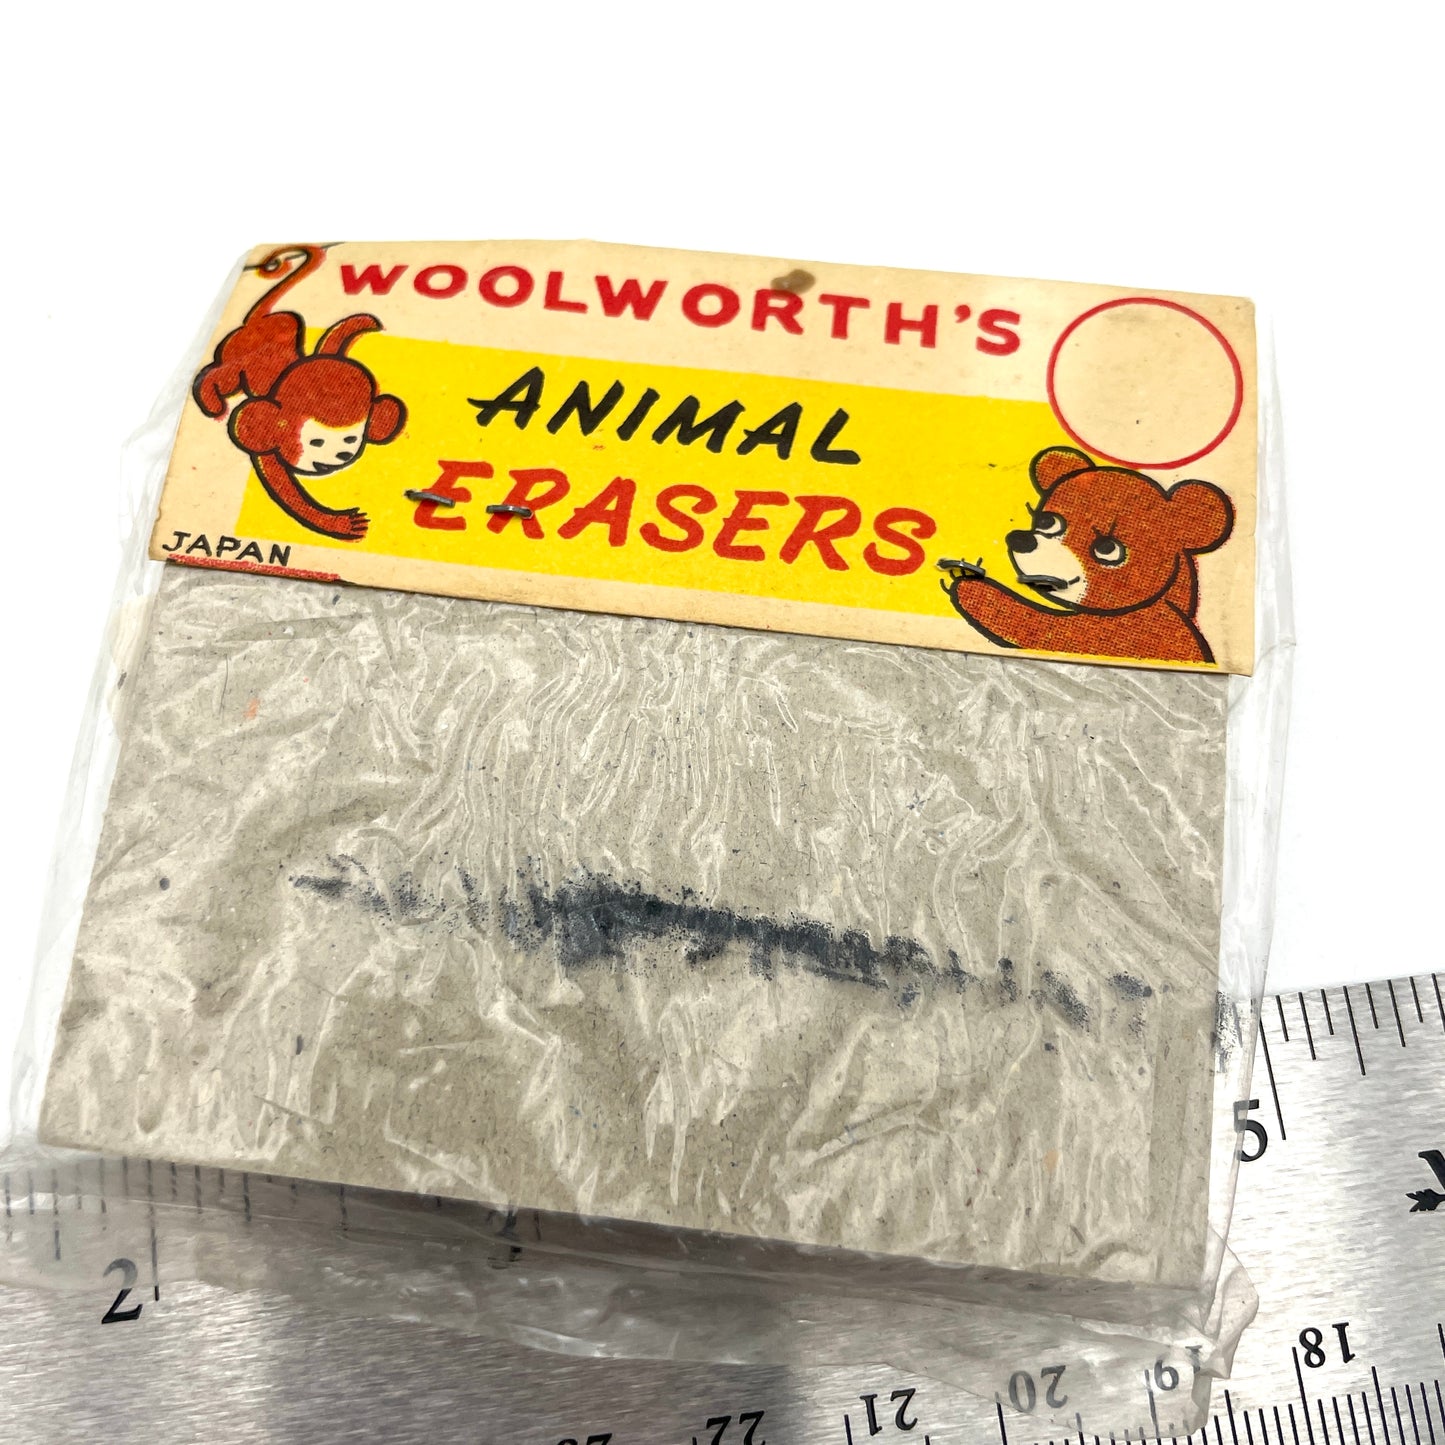 Vintage Woolworth’s Animal Erasers